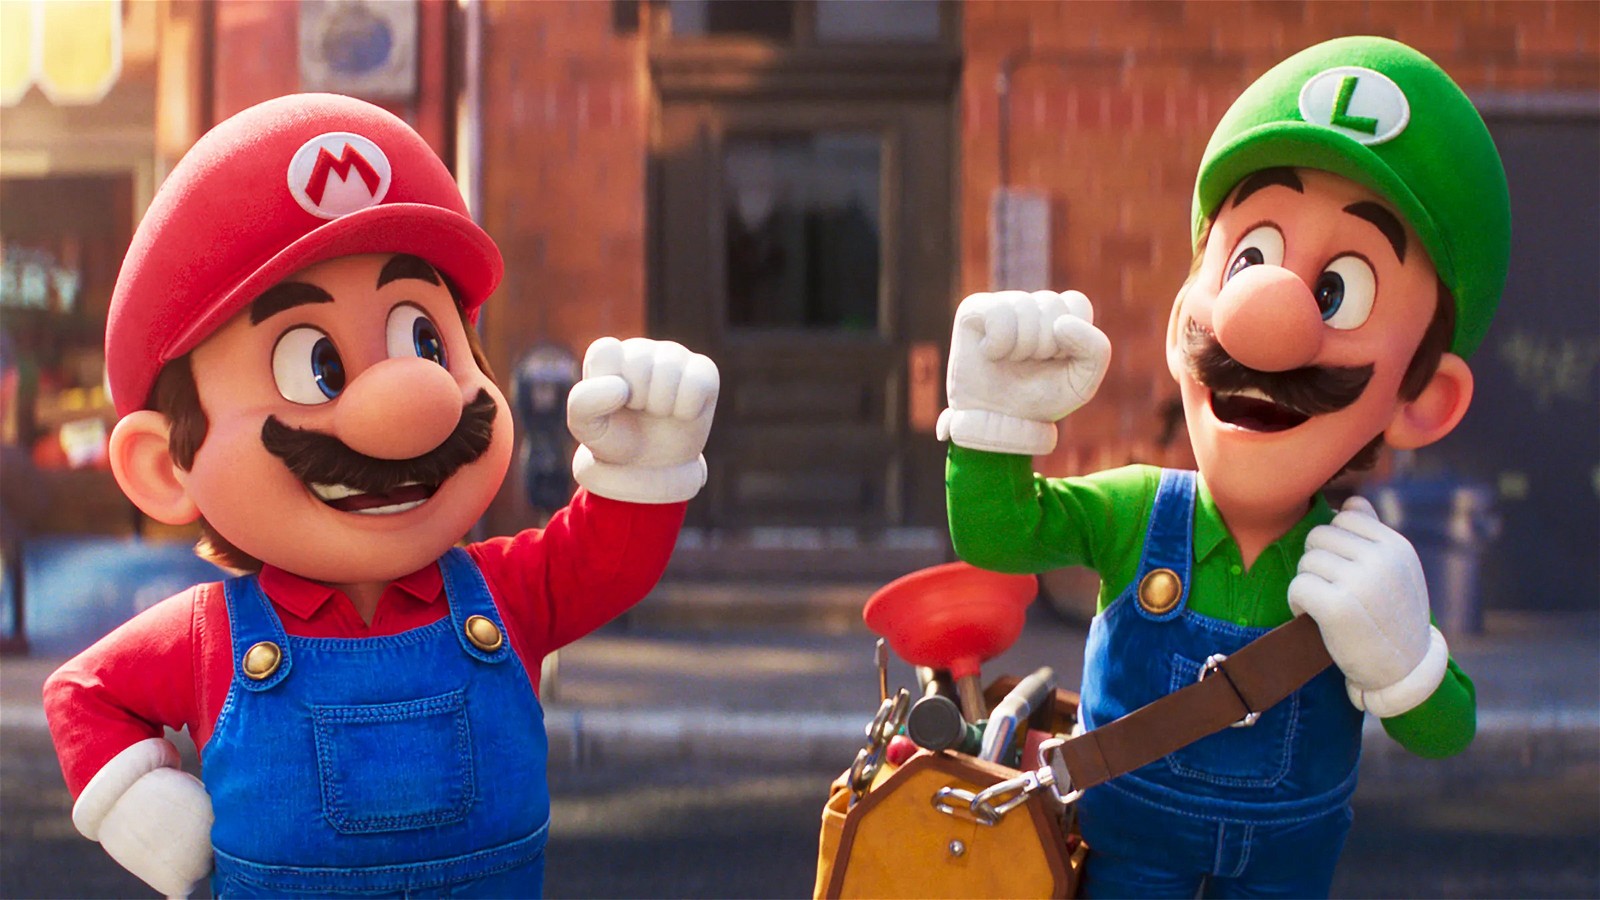 Chris Pratt's The Super Mario Bros. Movie was the second highest grossing fil of 2023